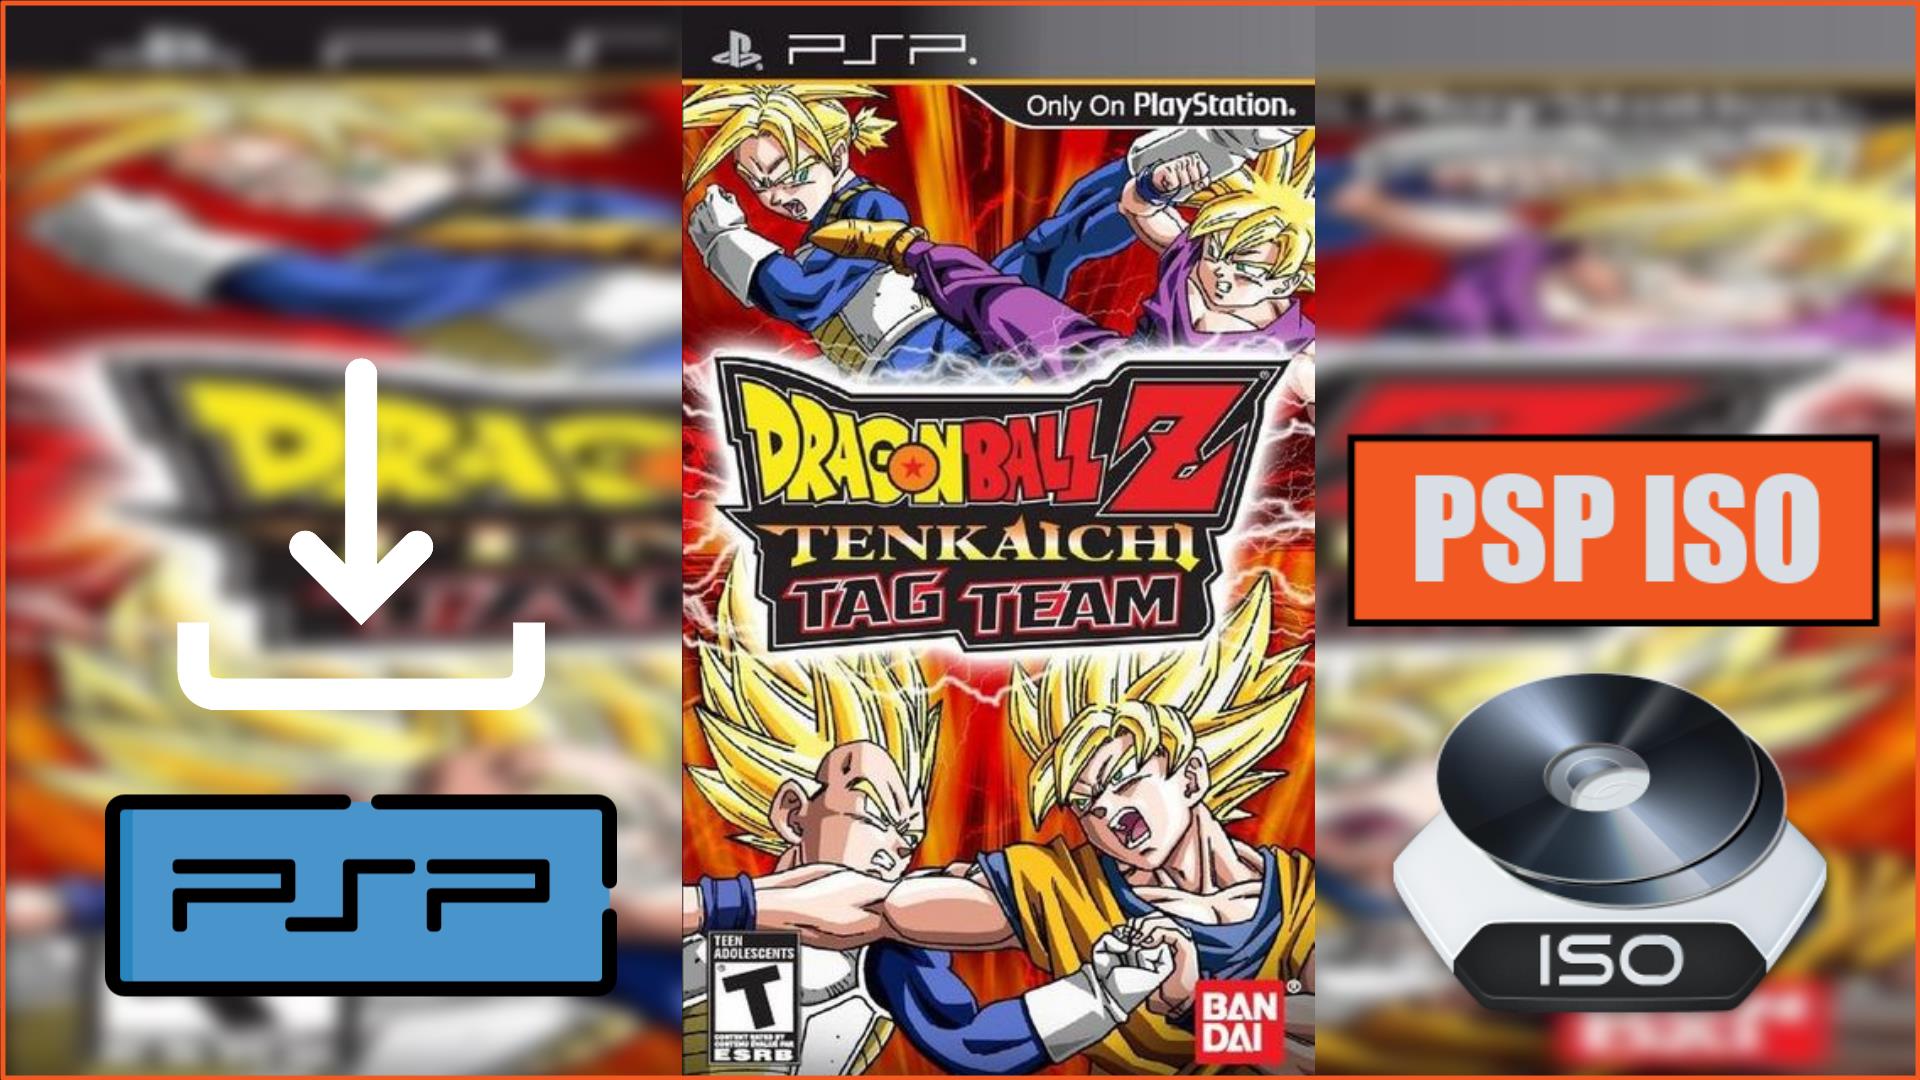 Dragon Ball Z: Tenkaichi Tag Team PSP APK ISO - Download Free for